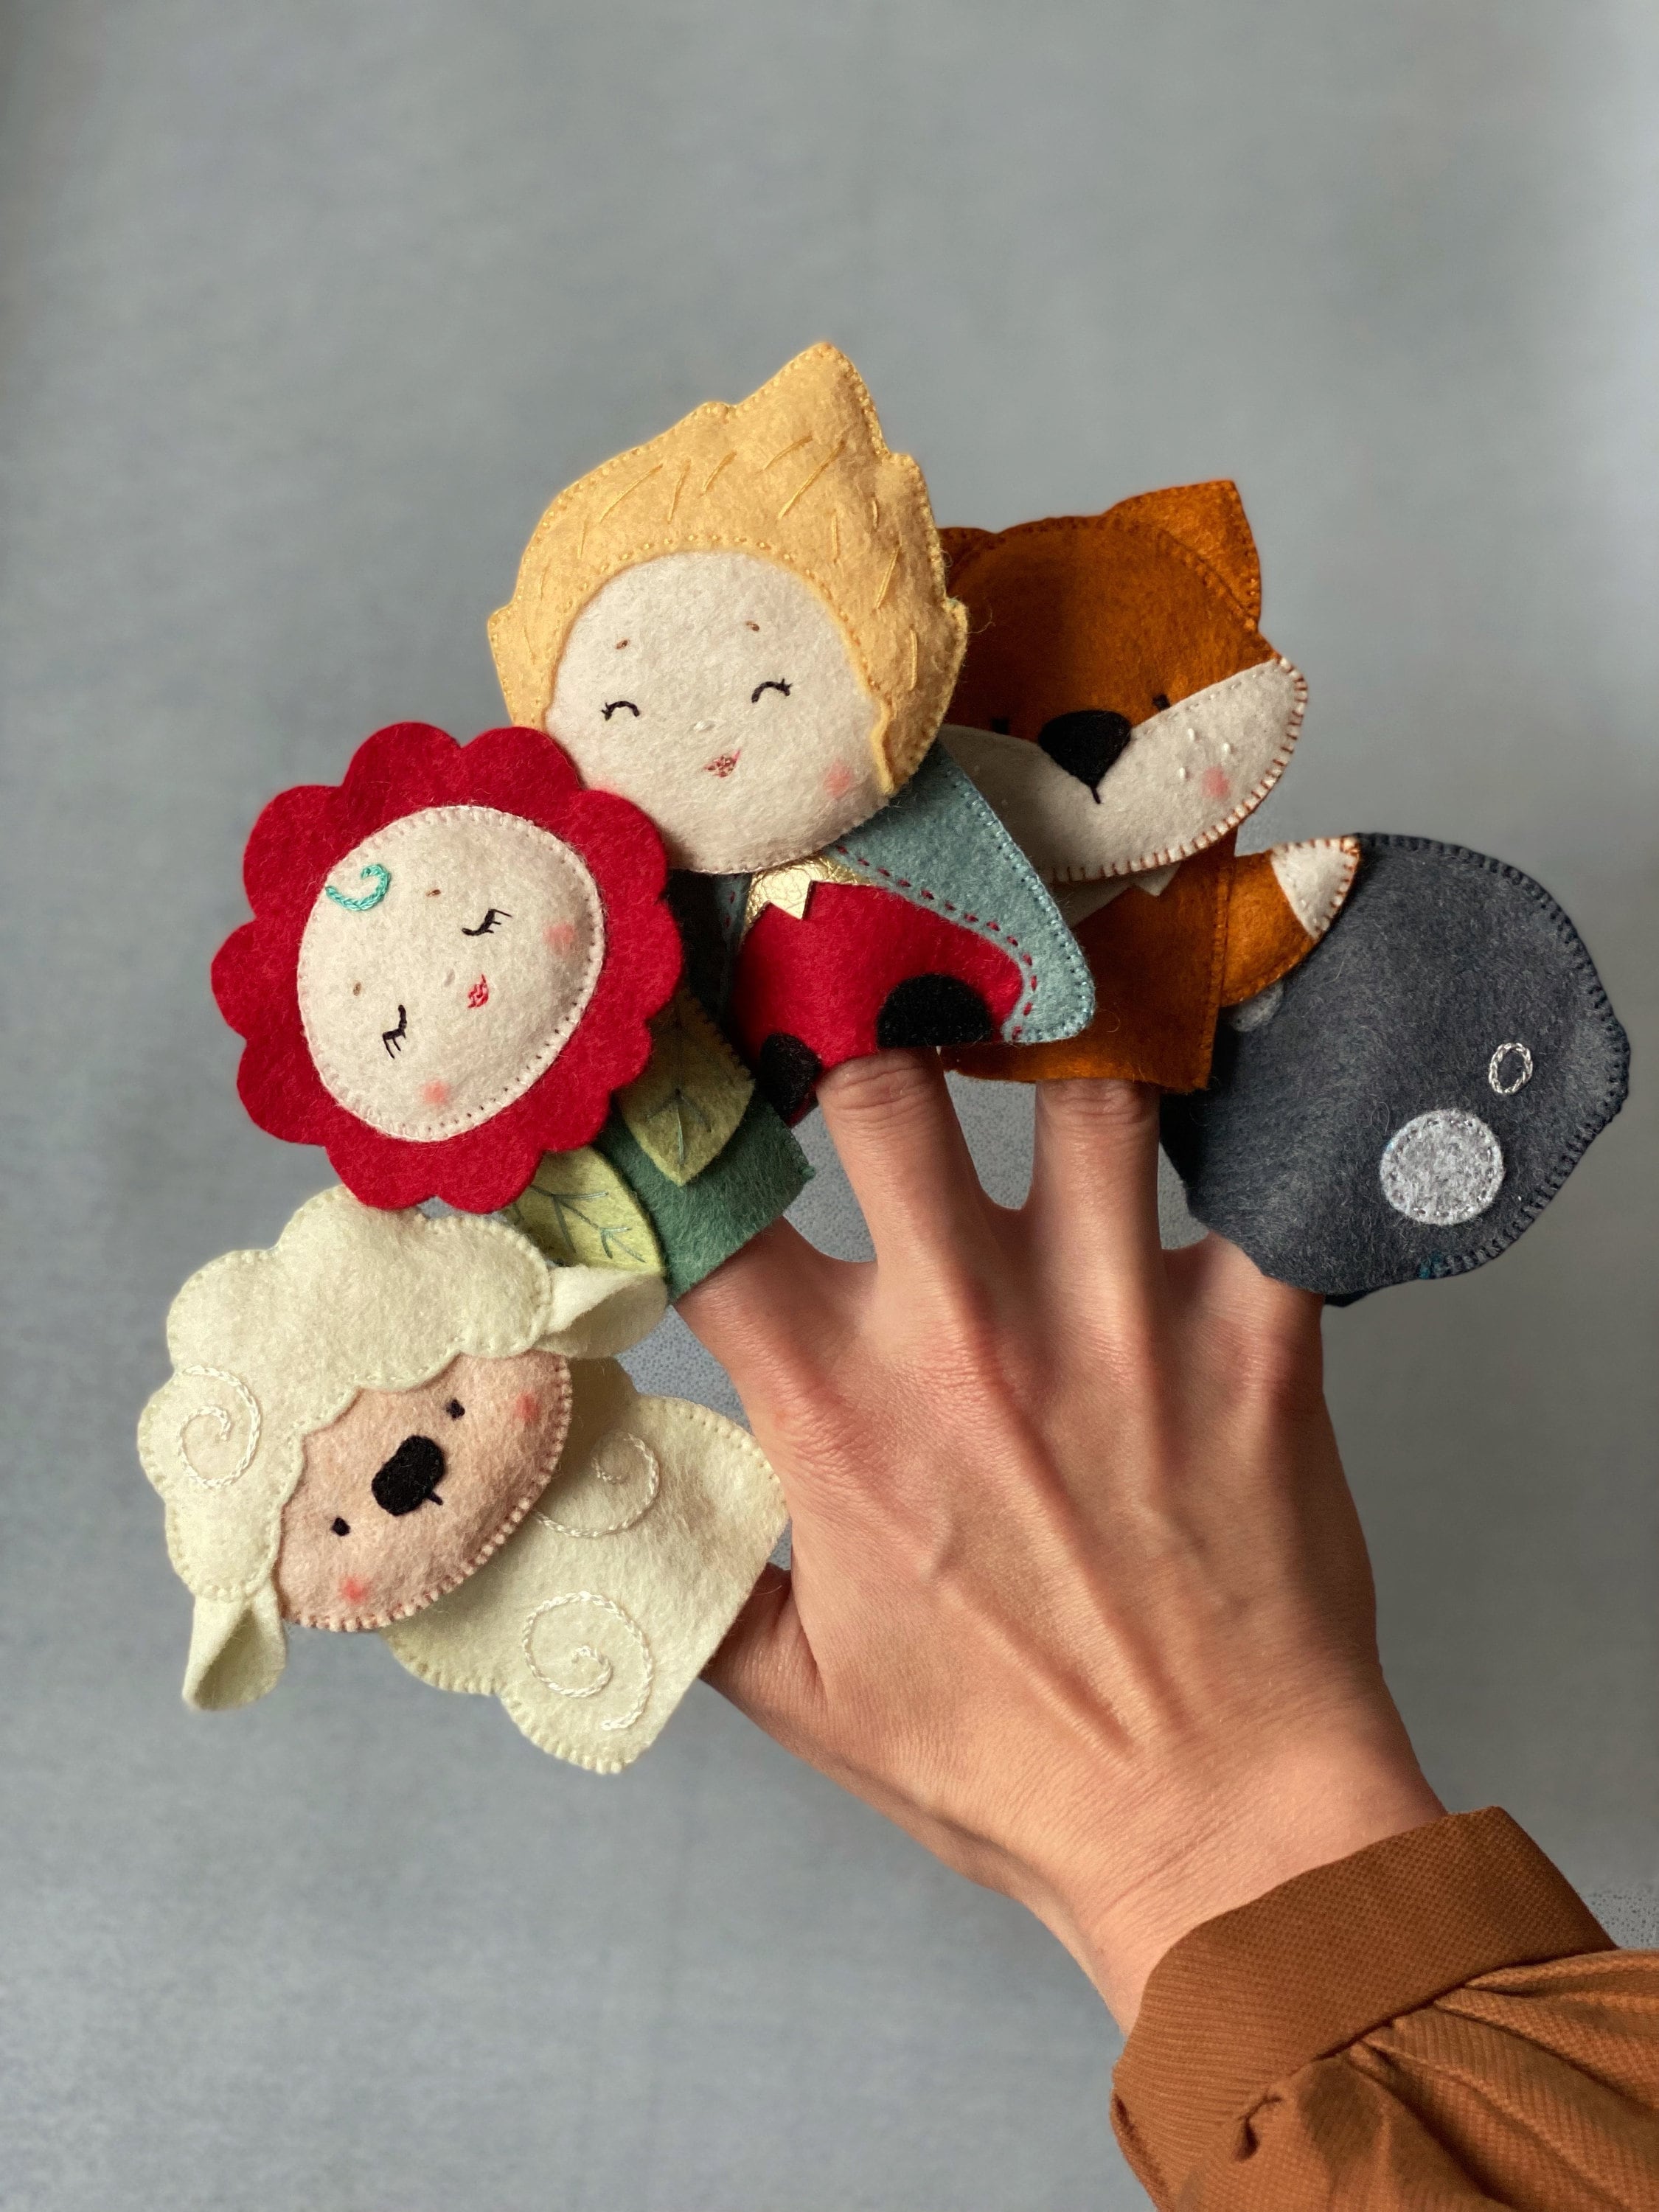 Set of Rubber Finger Hands for Finger Hands Mini Puppets Small